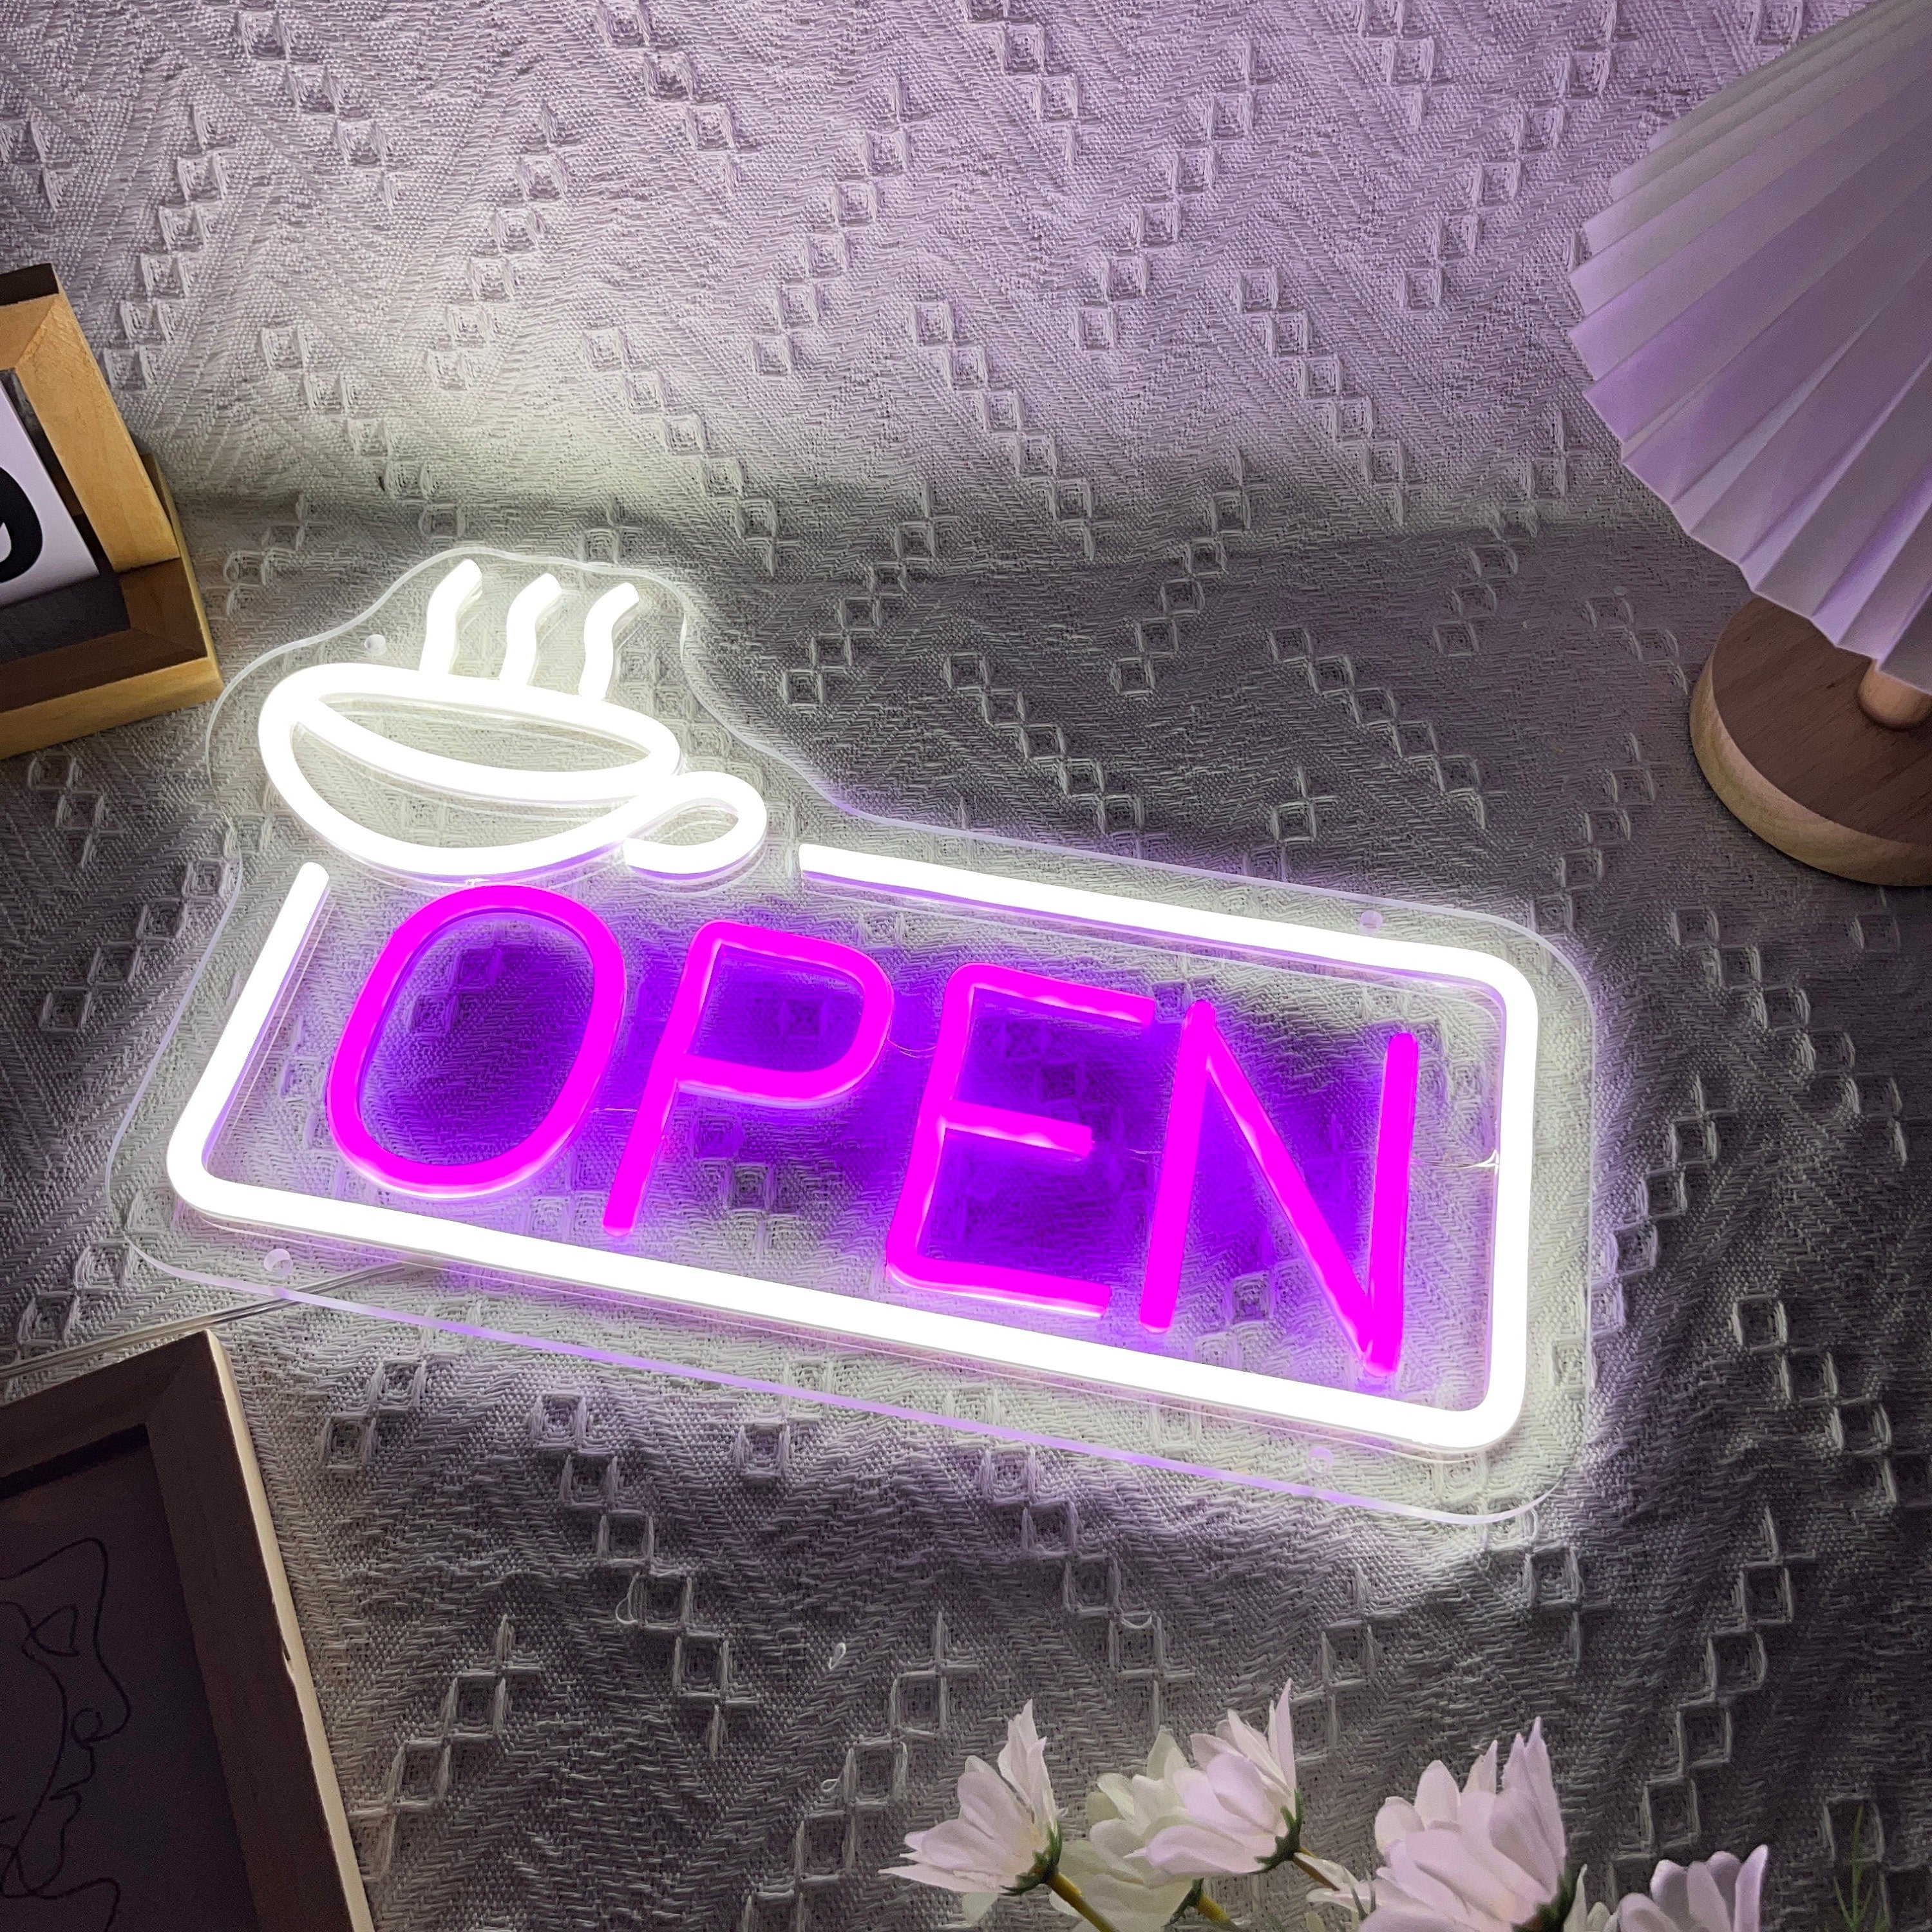 NEONIP-100% Handmade Coffee Shop Open Neon Sign Party Decorations